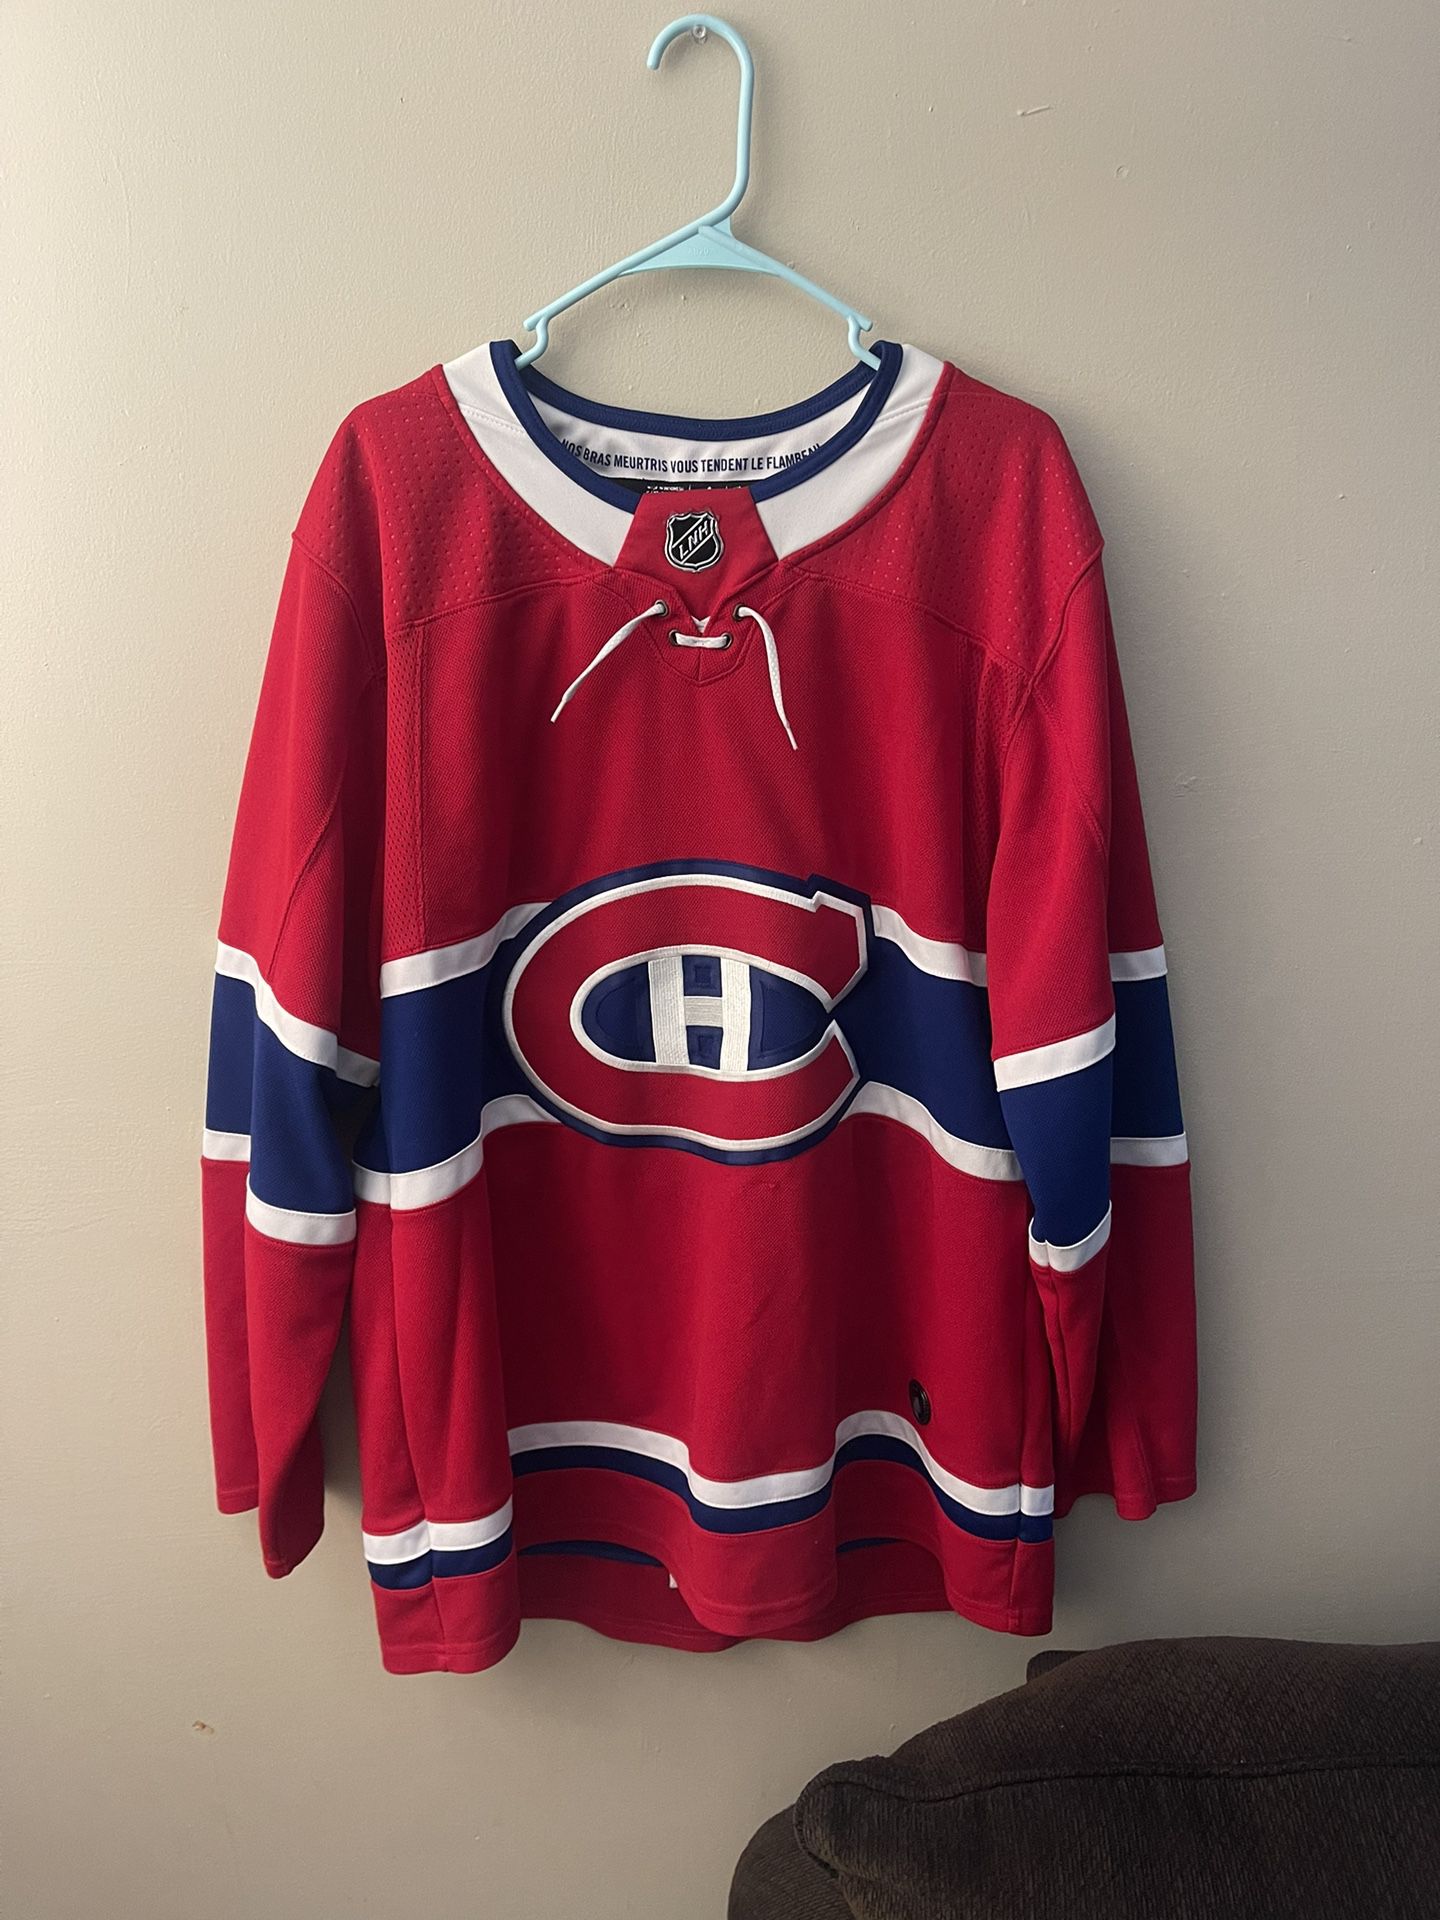 Montreal Canadiens Merchandise, Canadiens Apparel, Jerseys & Gear